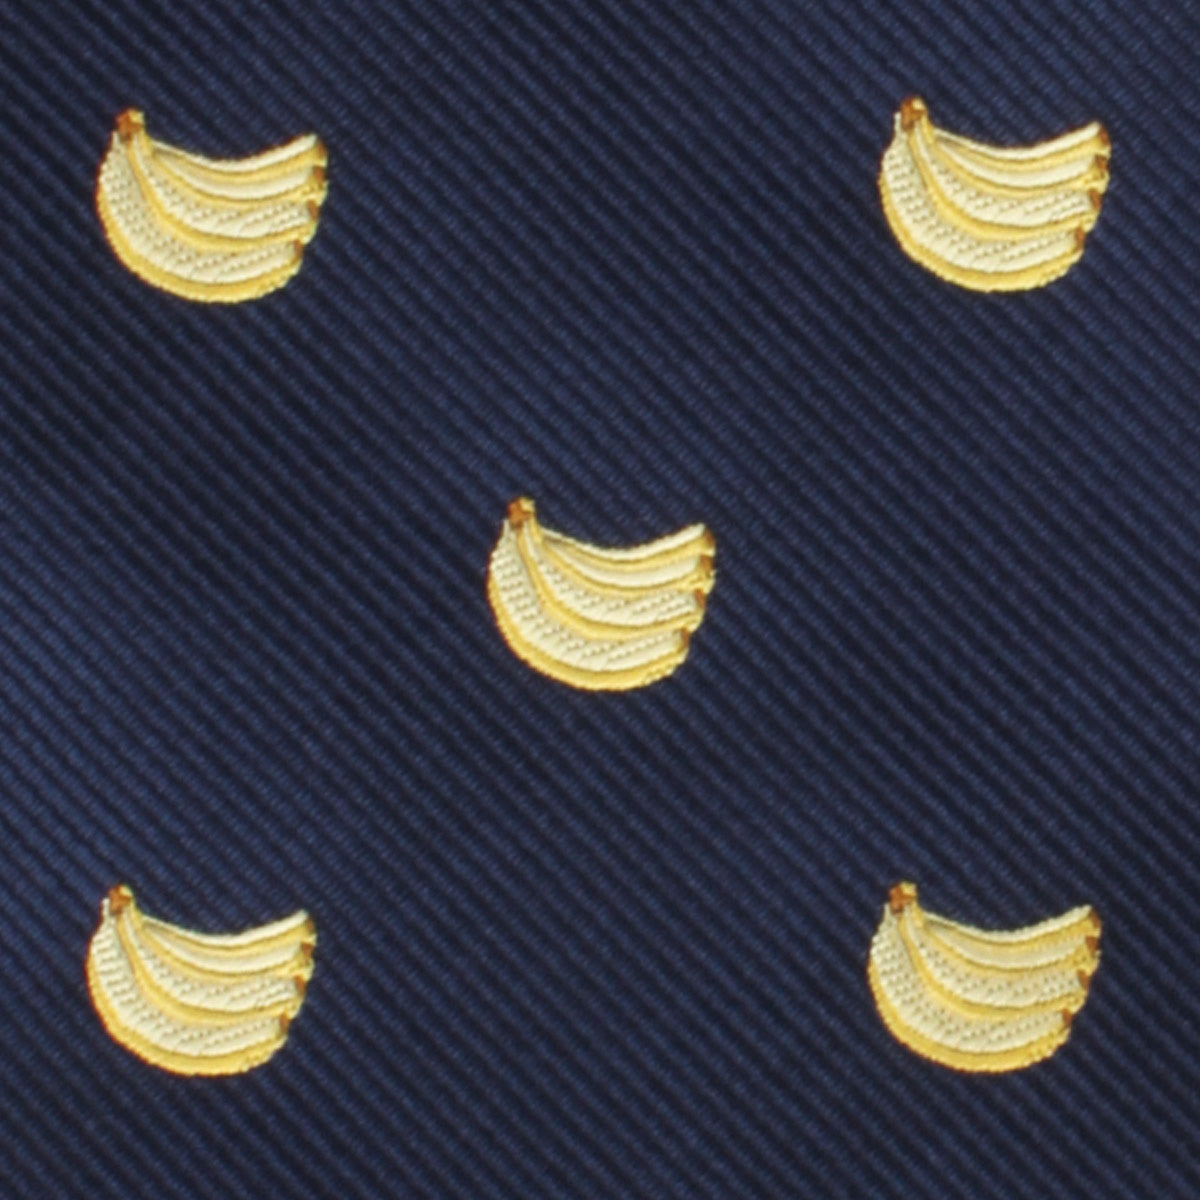 Fijian Banana Skinny Tie Fabric